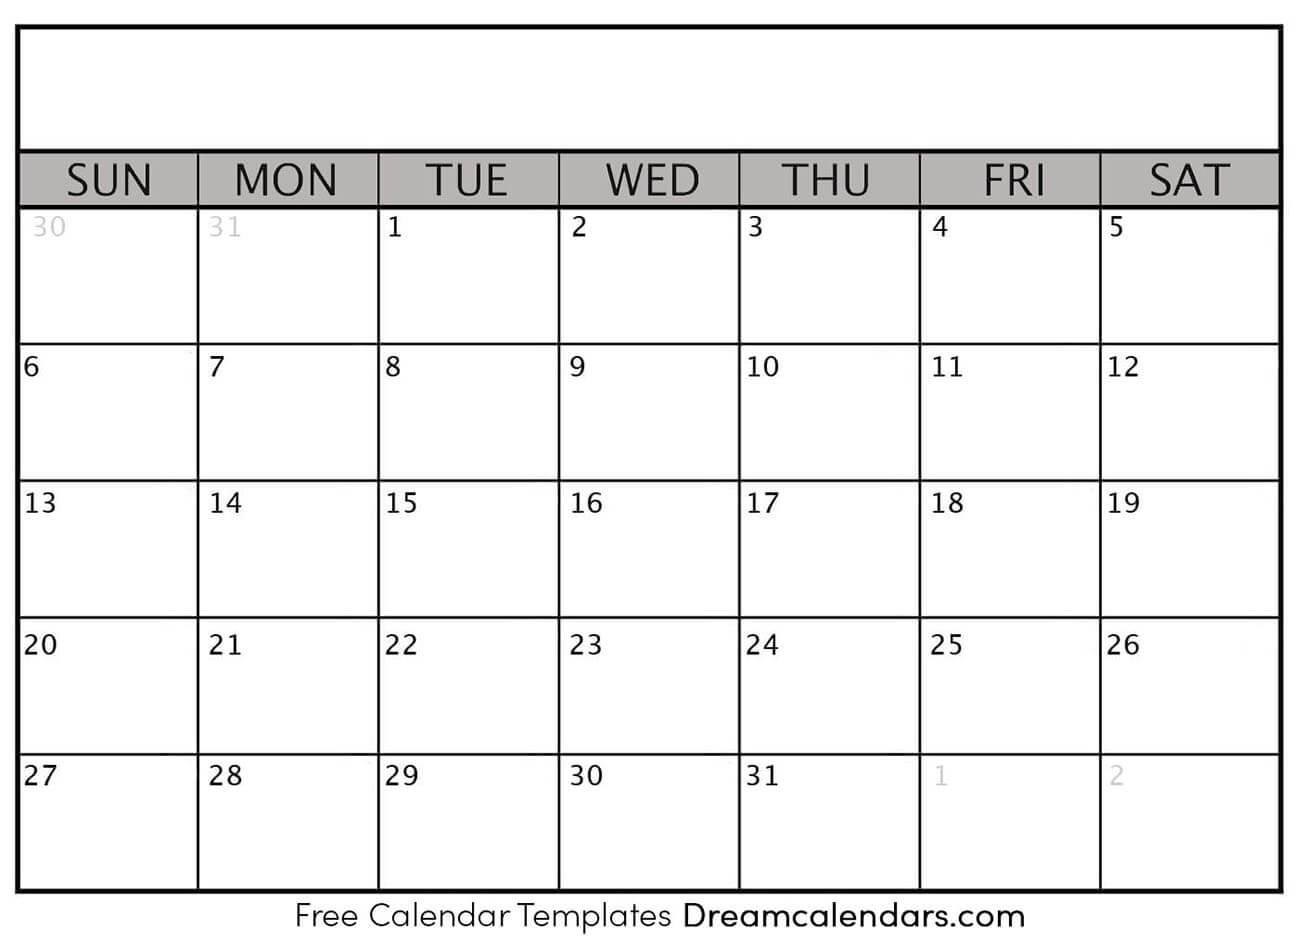 Printable Blank Calendar 2020 | Dream Calendars Printable Blank Calendar With Dates Only